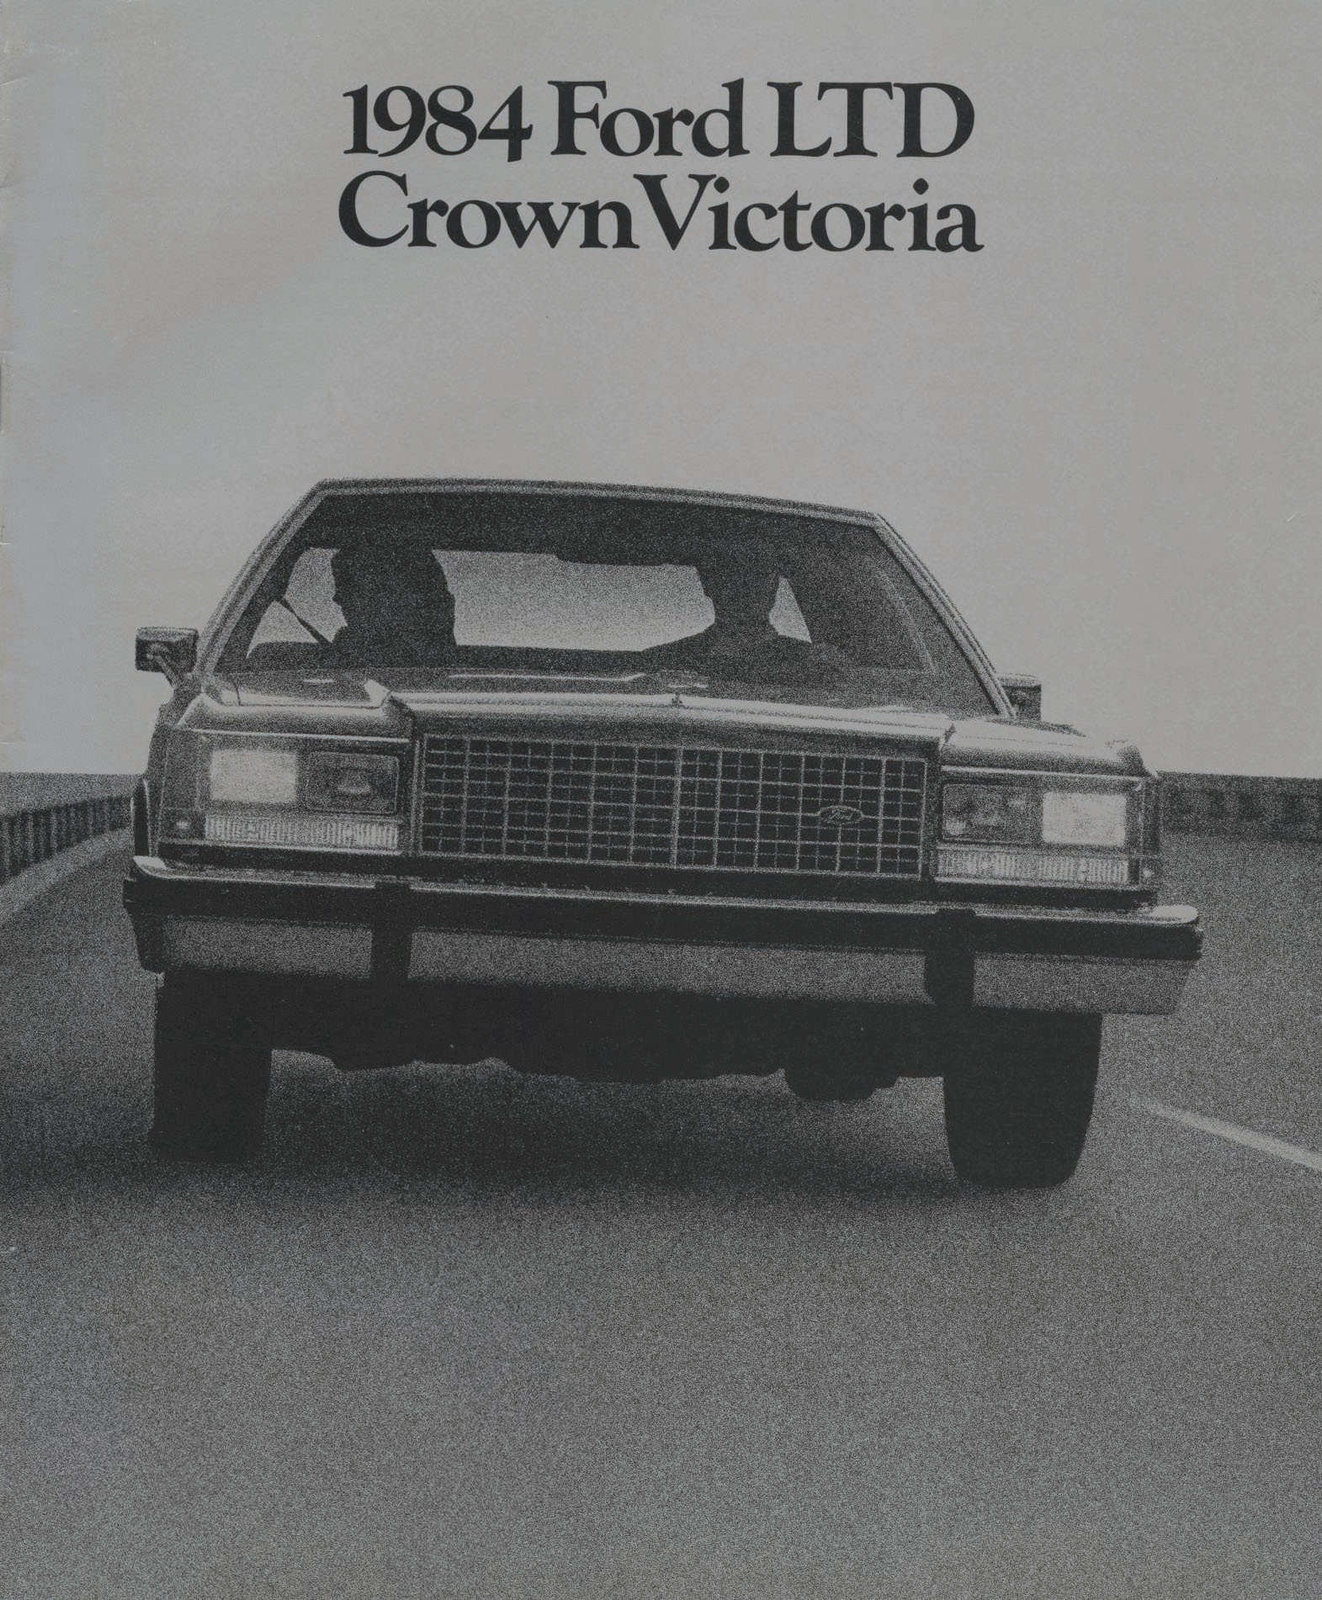 n_1984 Ford LTD Crown Victoria-01.jpg